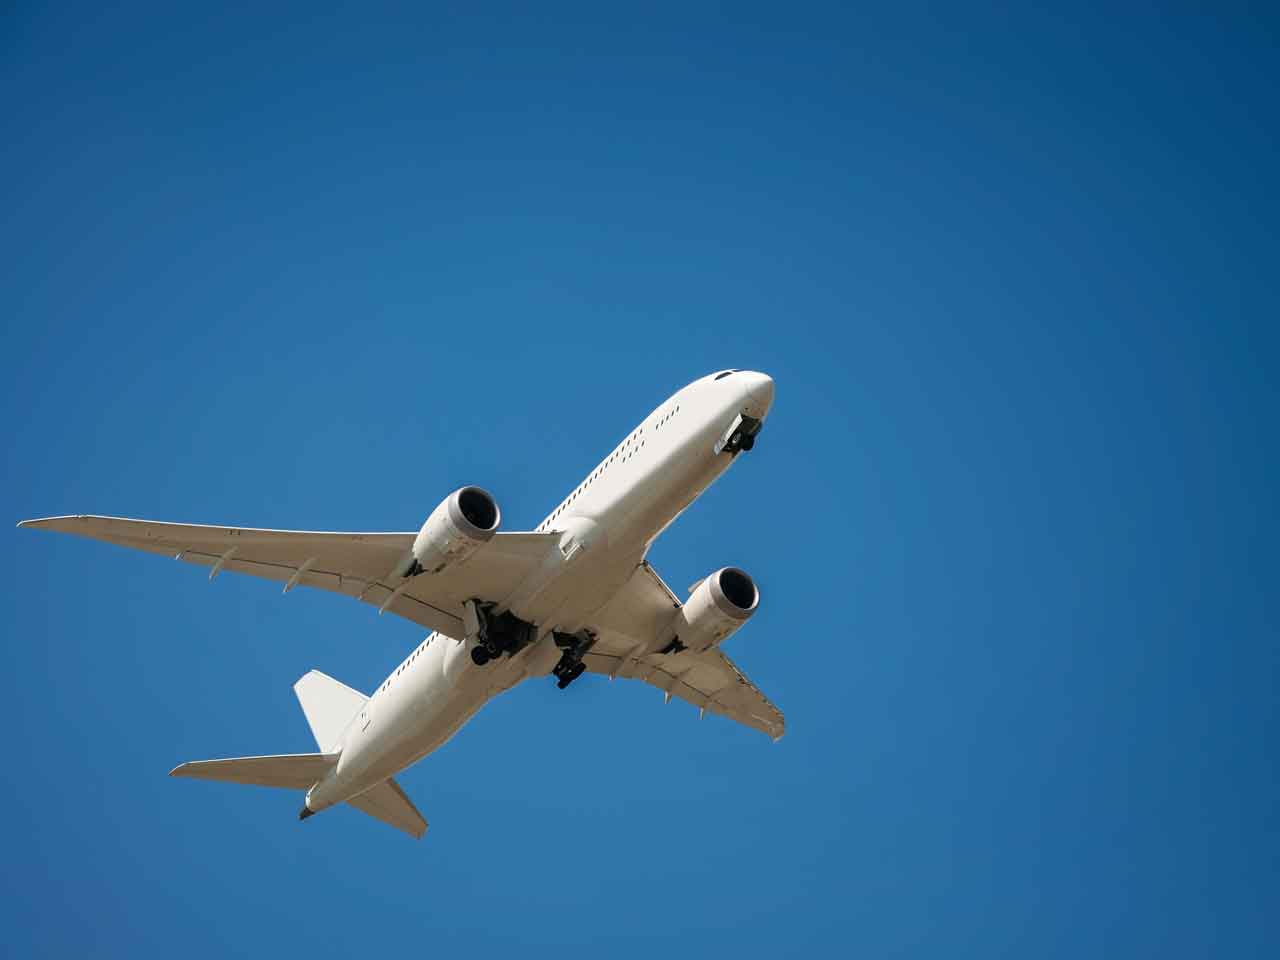 Aeroplane ascending against a blue sky. 